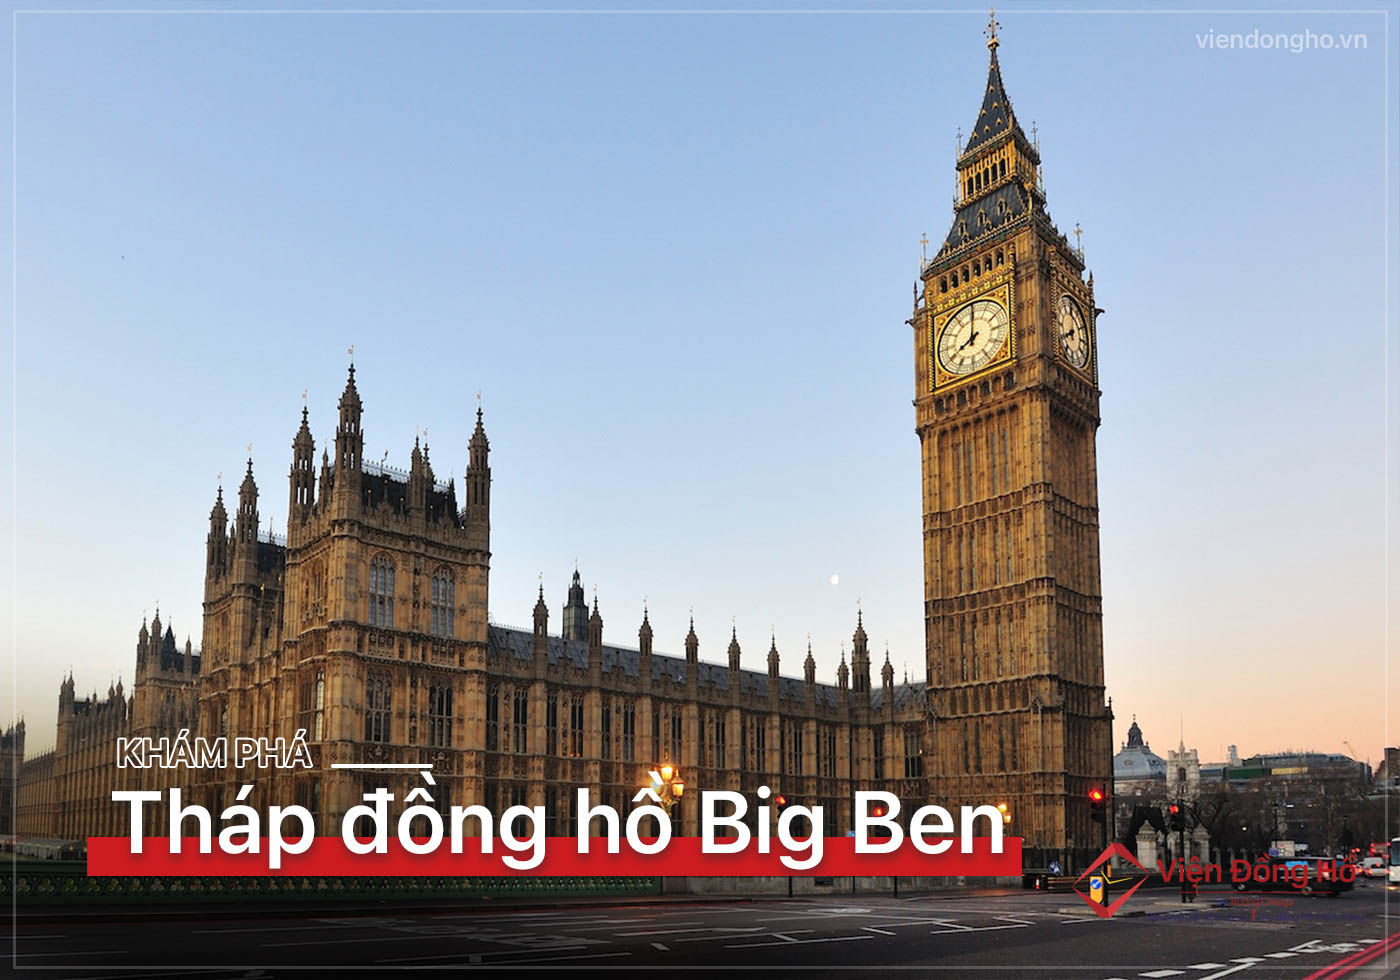 Thap dong ho Big Ben - Bieu tuong lich su Anh quoc 5